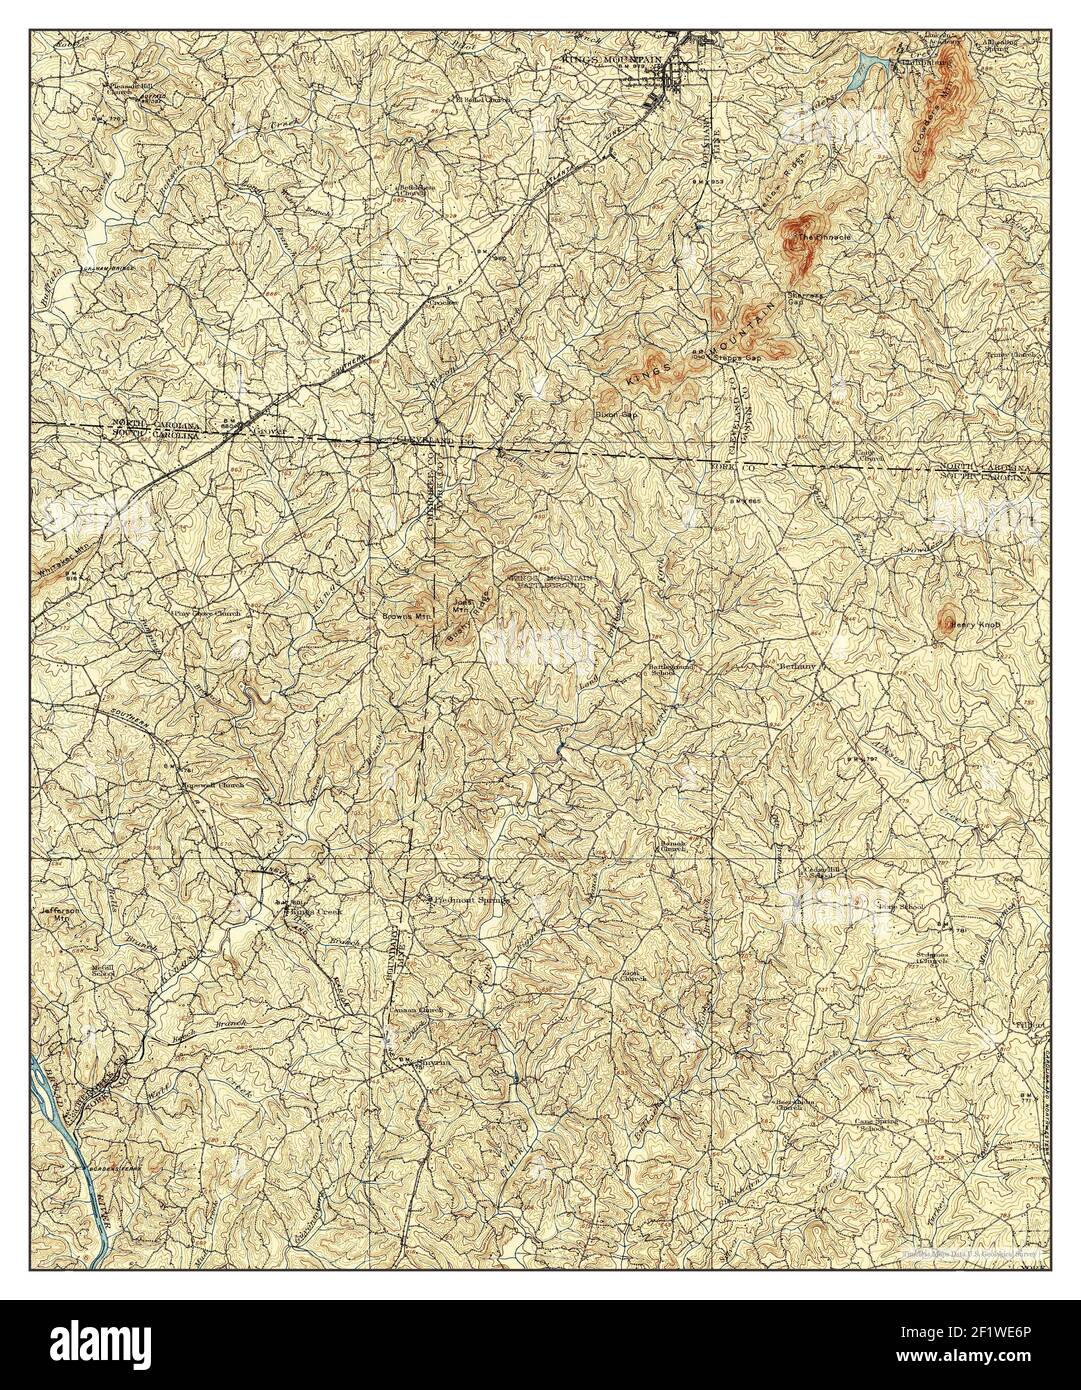 Kings Mountain, South Carolina, map 1908, 1:62500, United States of America by Timeless Maps, data U.S. Geological Survey Stock Photo